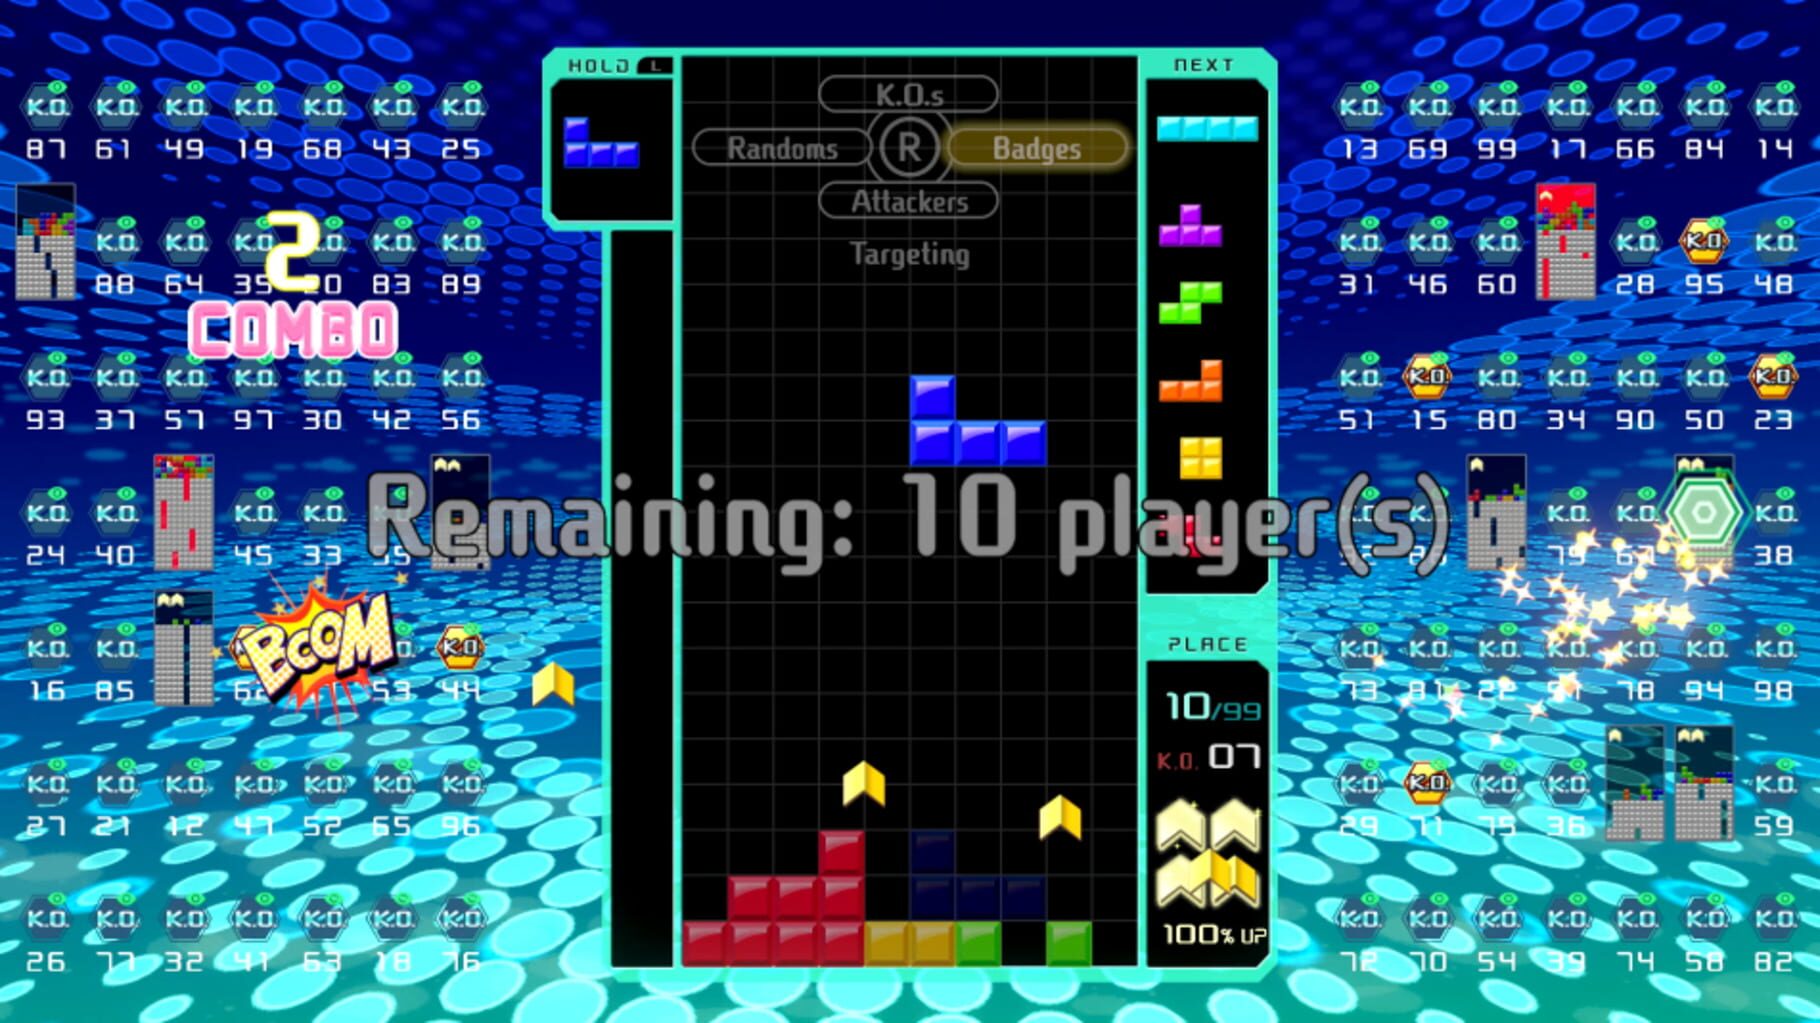 Tetris 99 screenshot